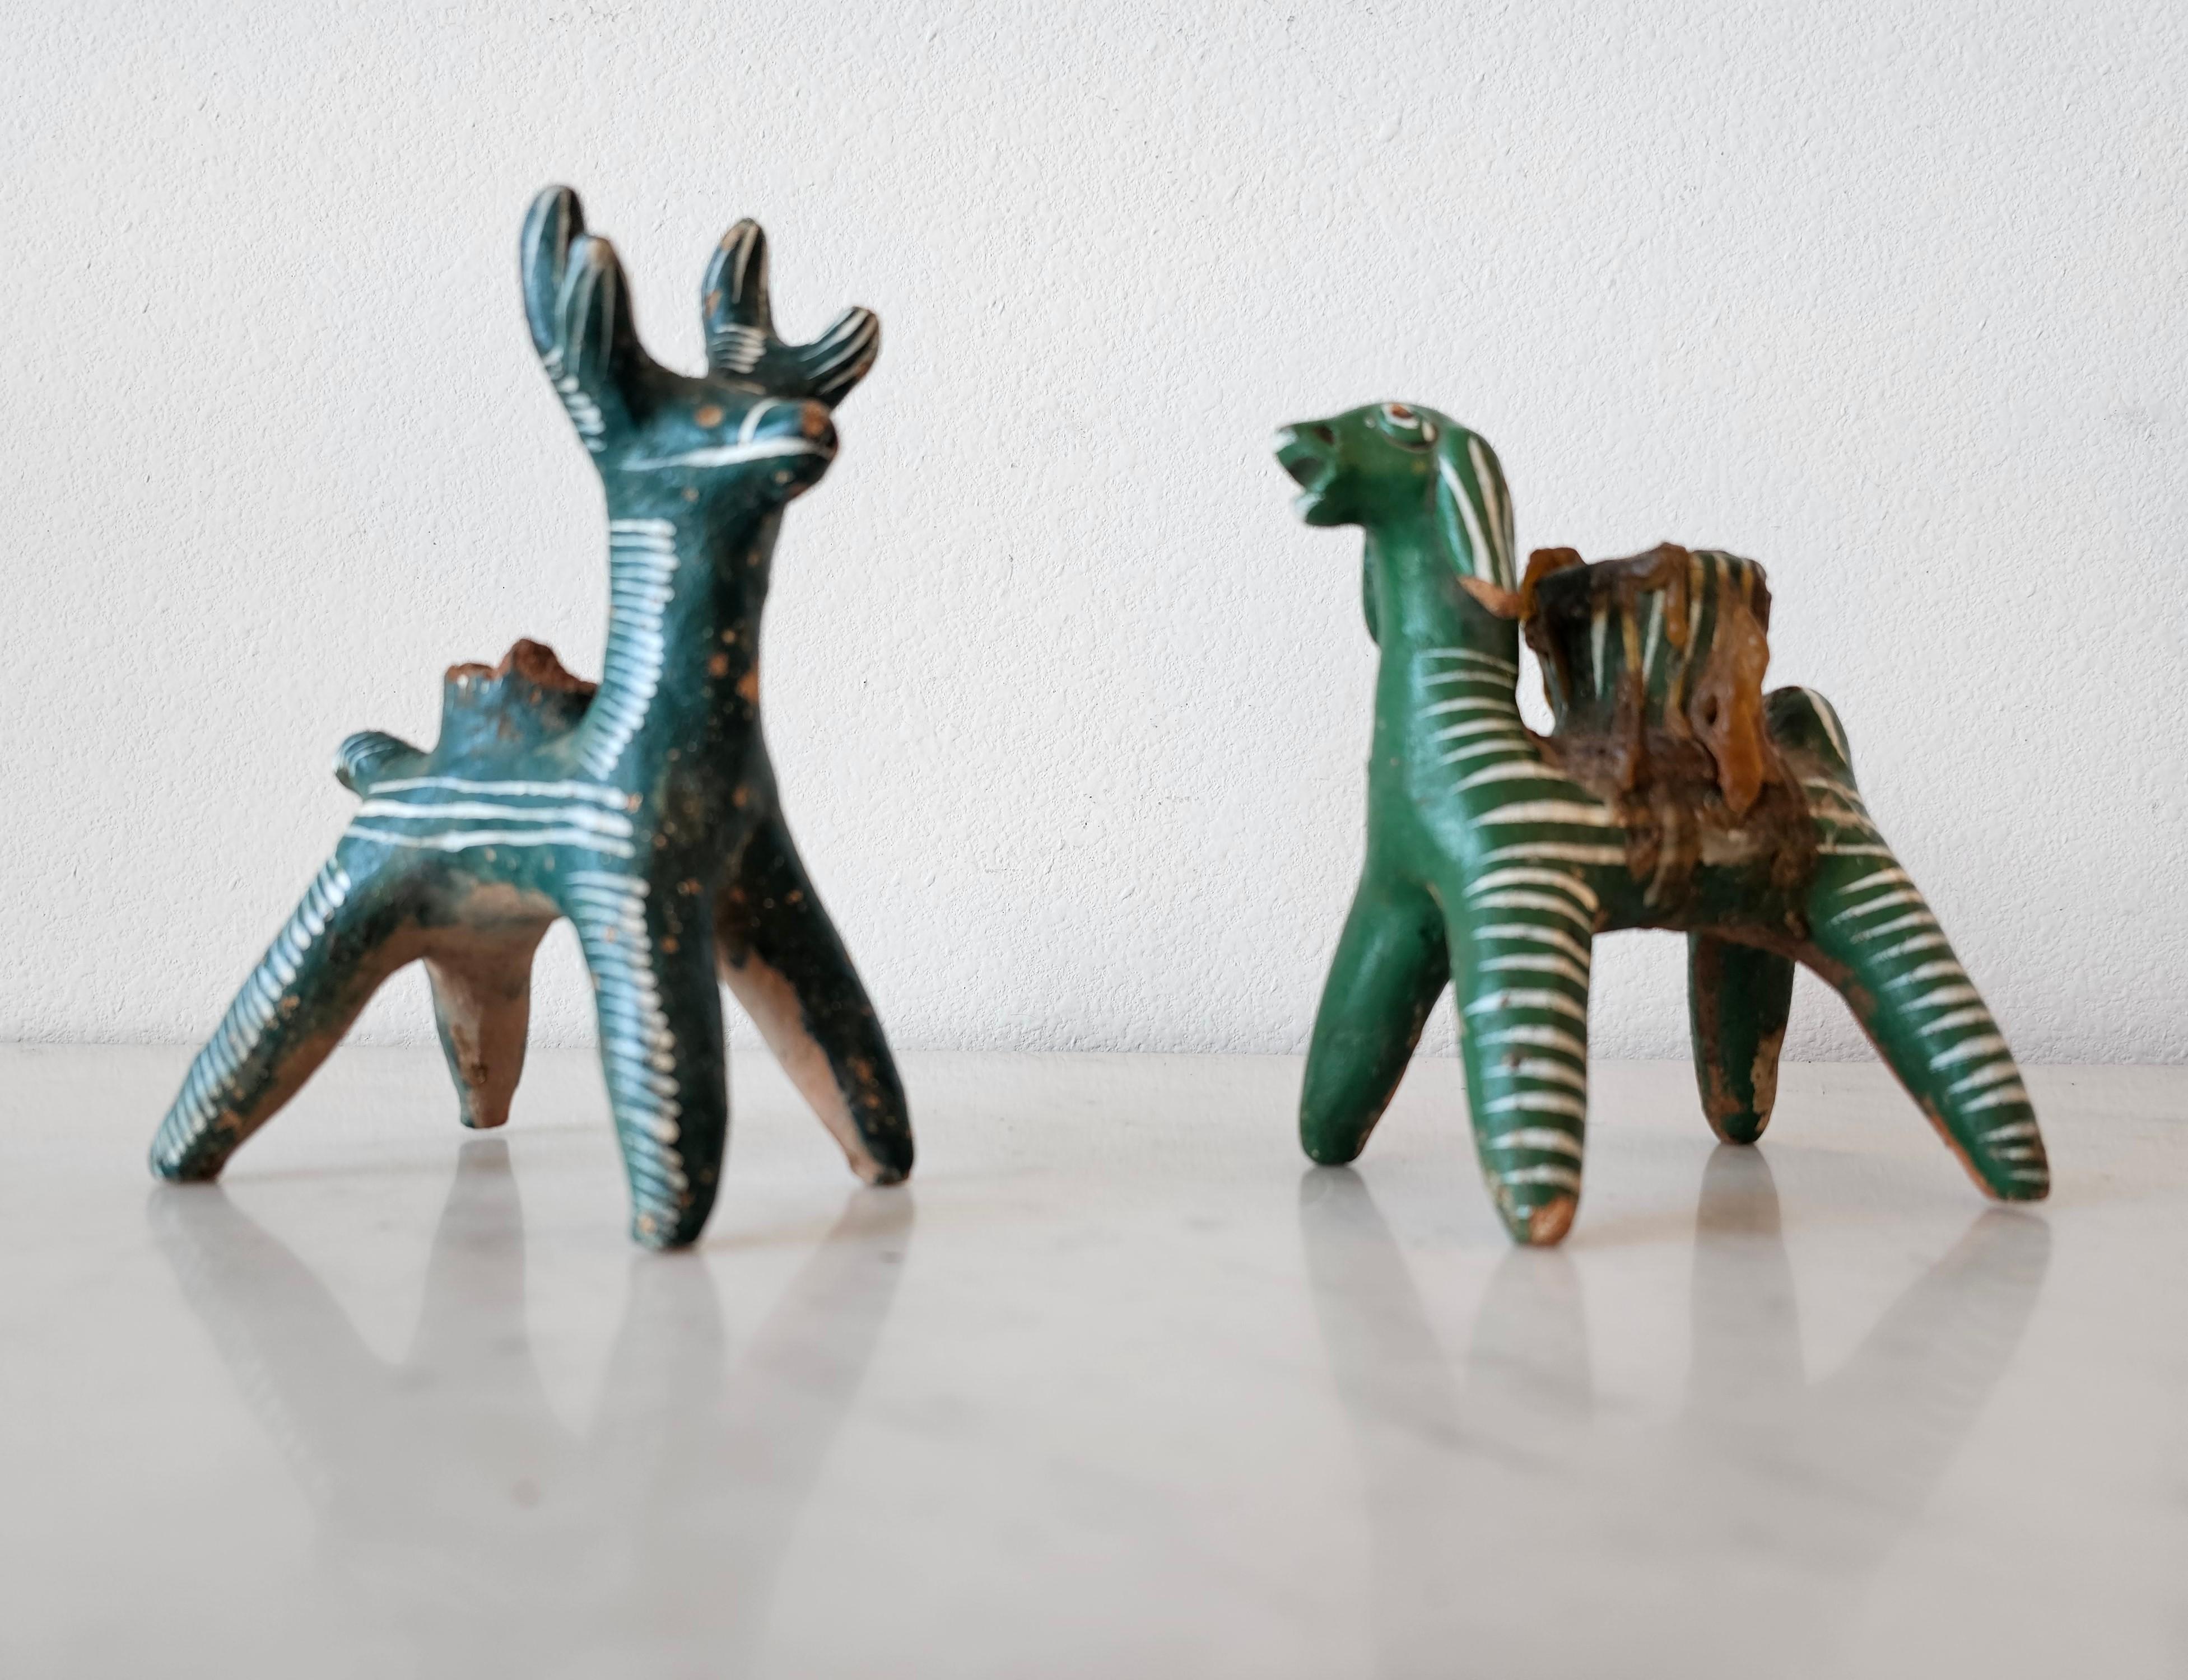 Vintage Nahua-Kerzenhalter mit Tieren aus mexikanischer Volkskunst, Chililico Hidalgo, Nahua-Keramik (Handgefertigt) im Angebot